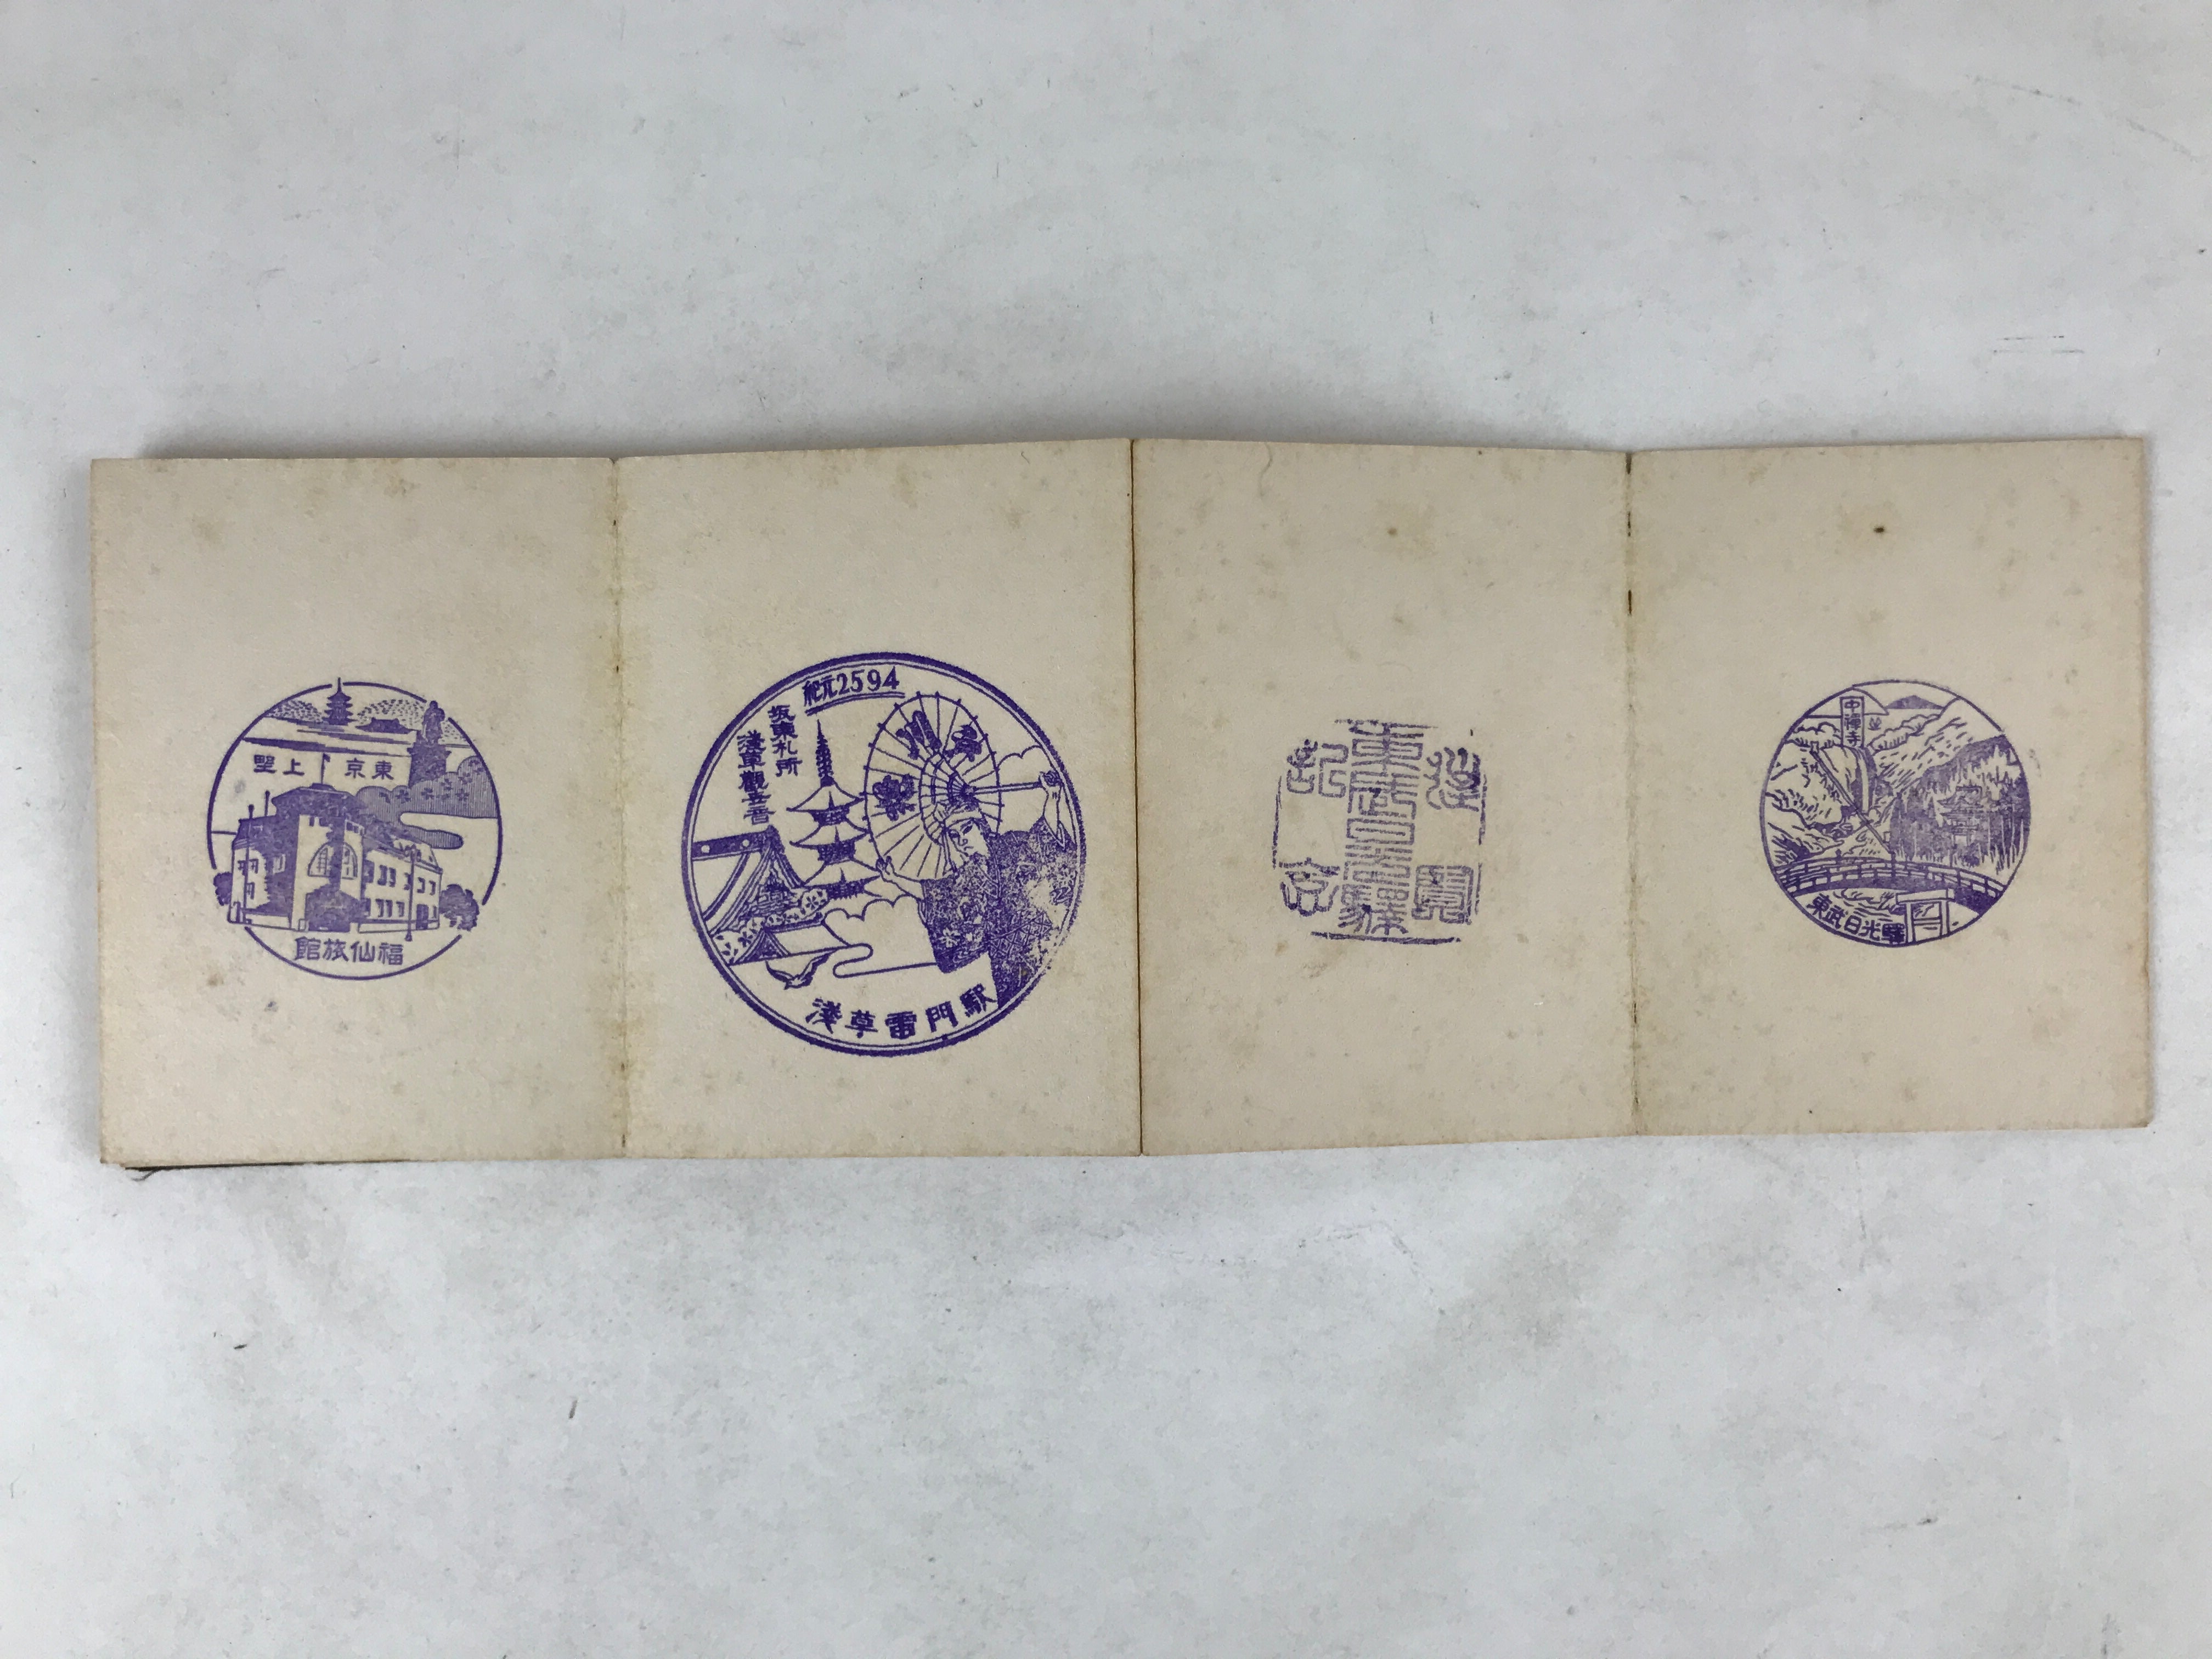 Japanese Seal Stamp Shuin Book C1930 Nagoya Tokyo Famous Location Brown BA268